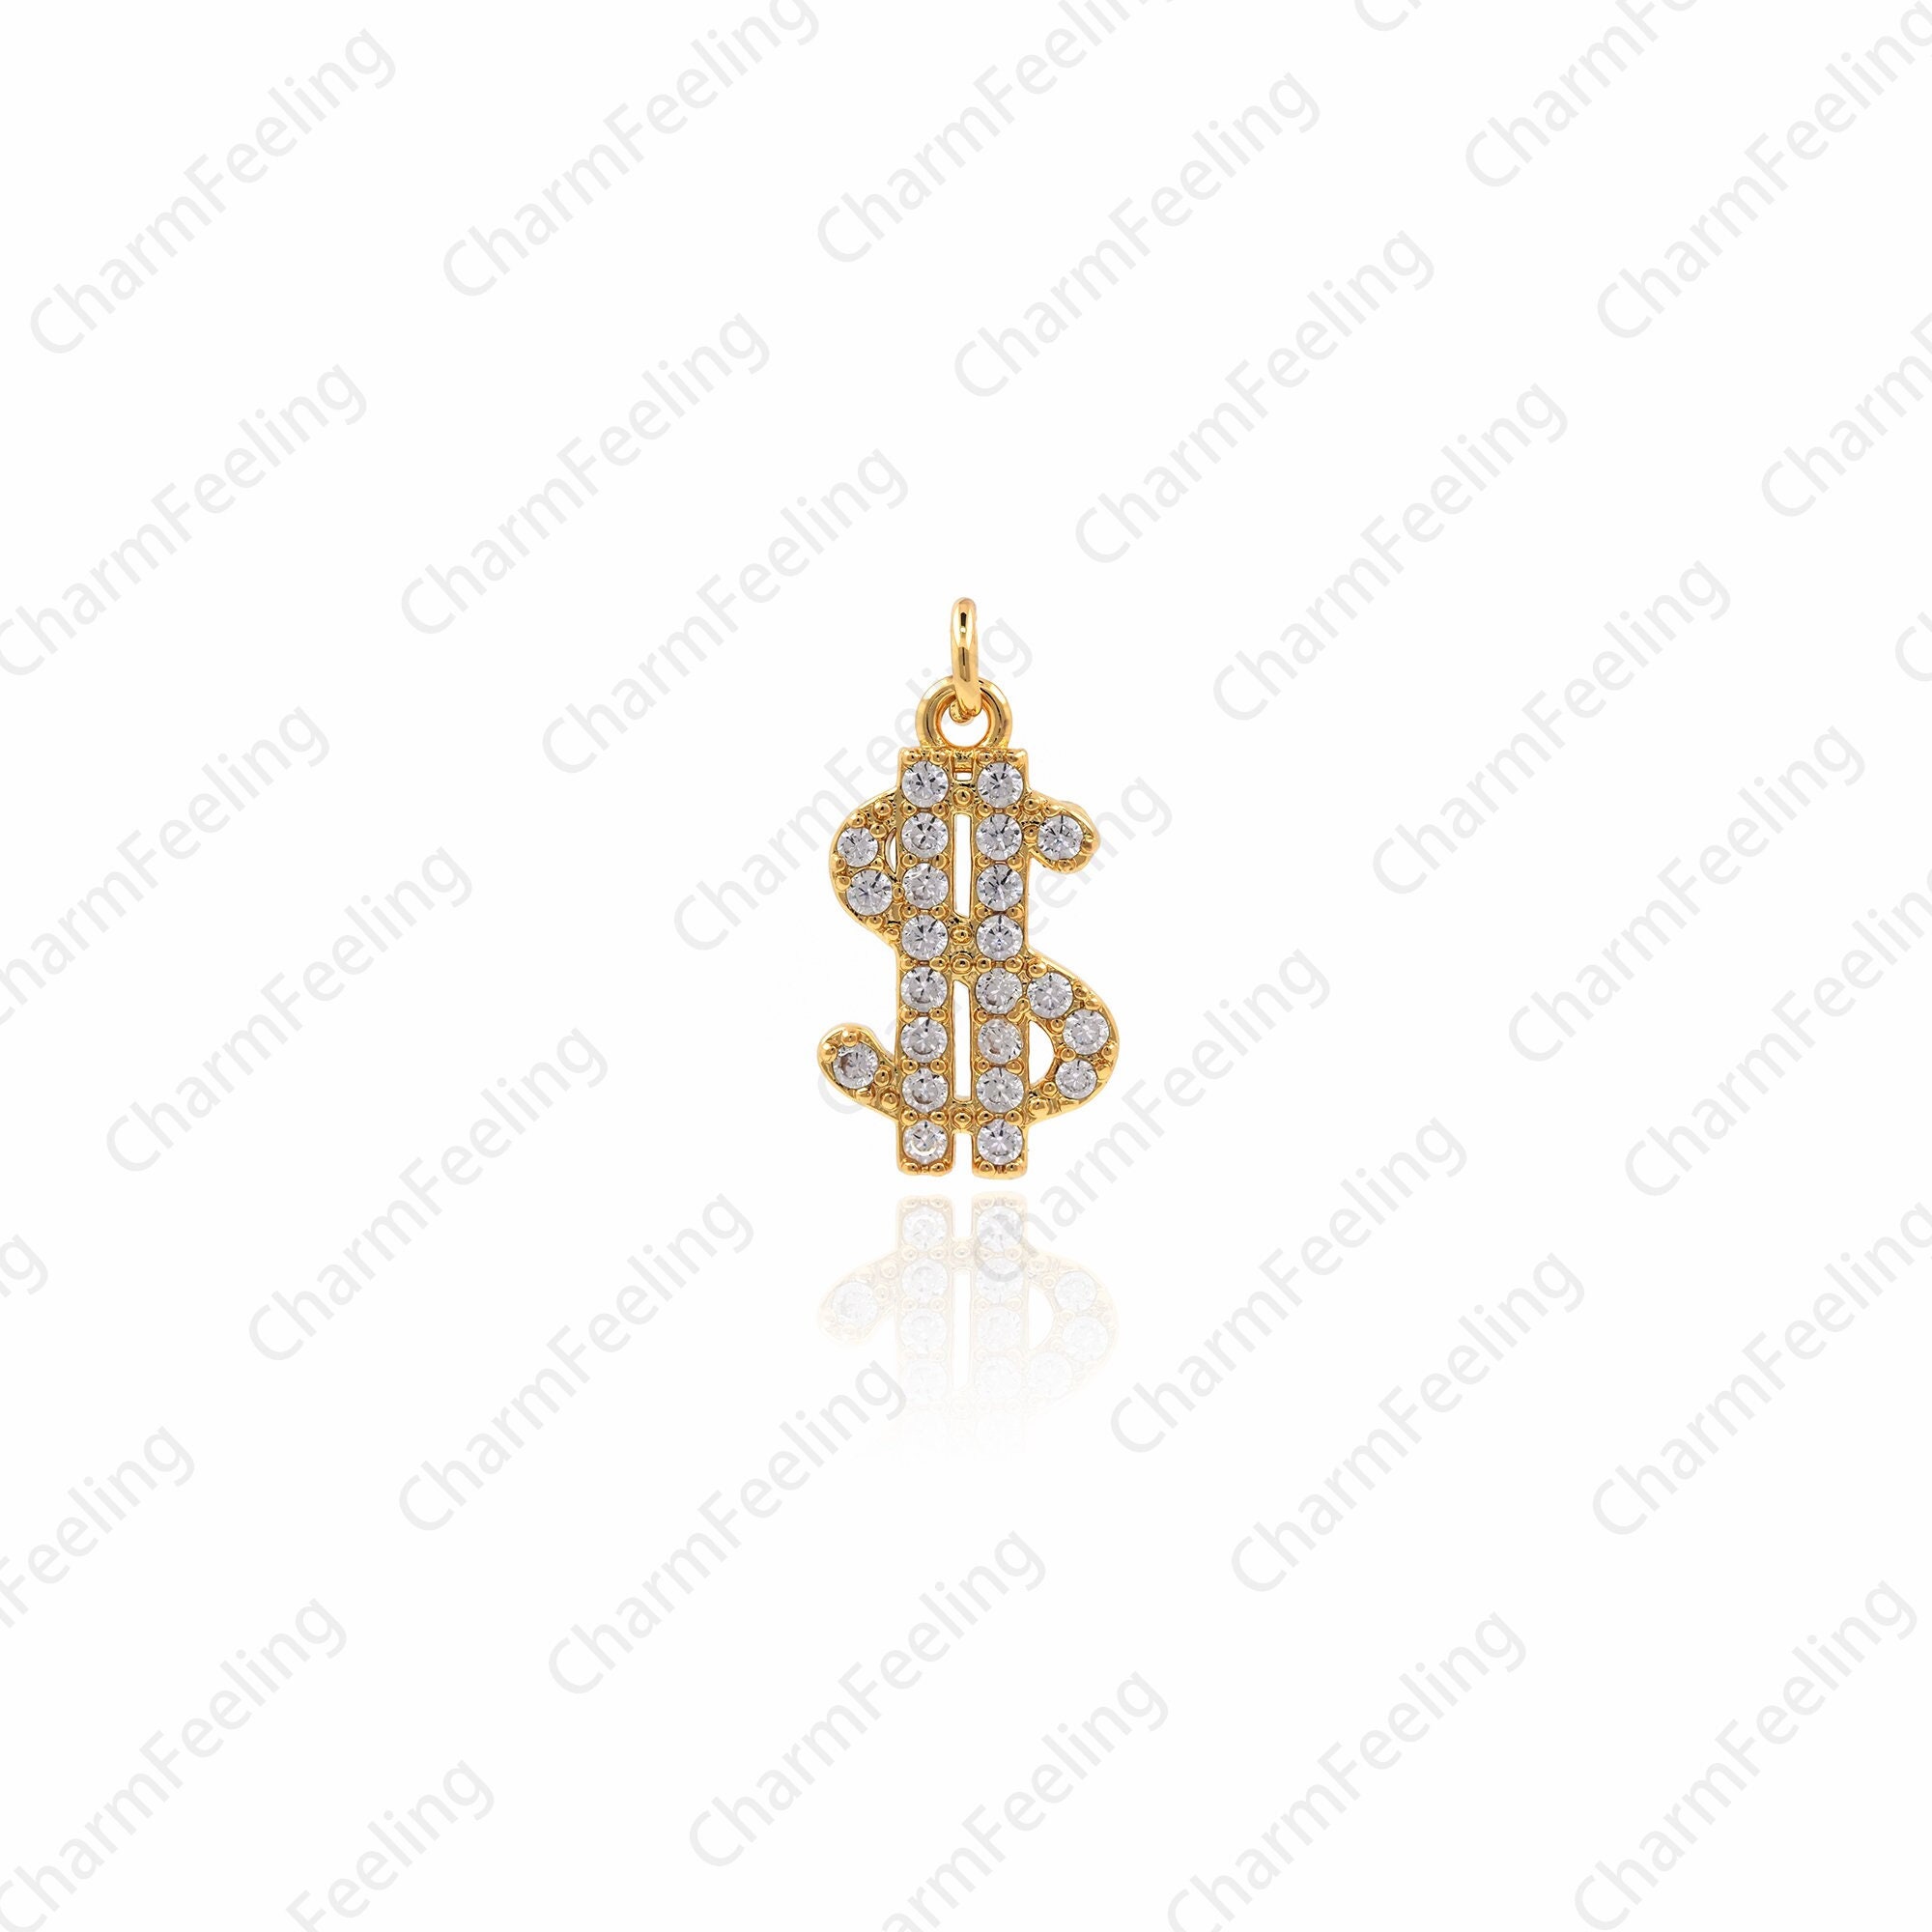 18K Gold Filled Dollar Sign Pendant, Micropav Cz Money Necklace, Charm, 18x9.5x1.8mm